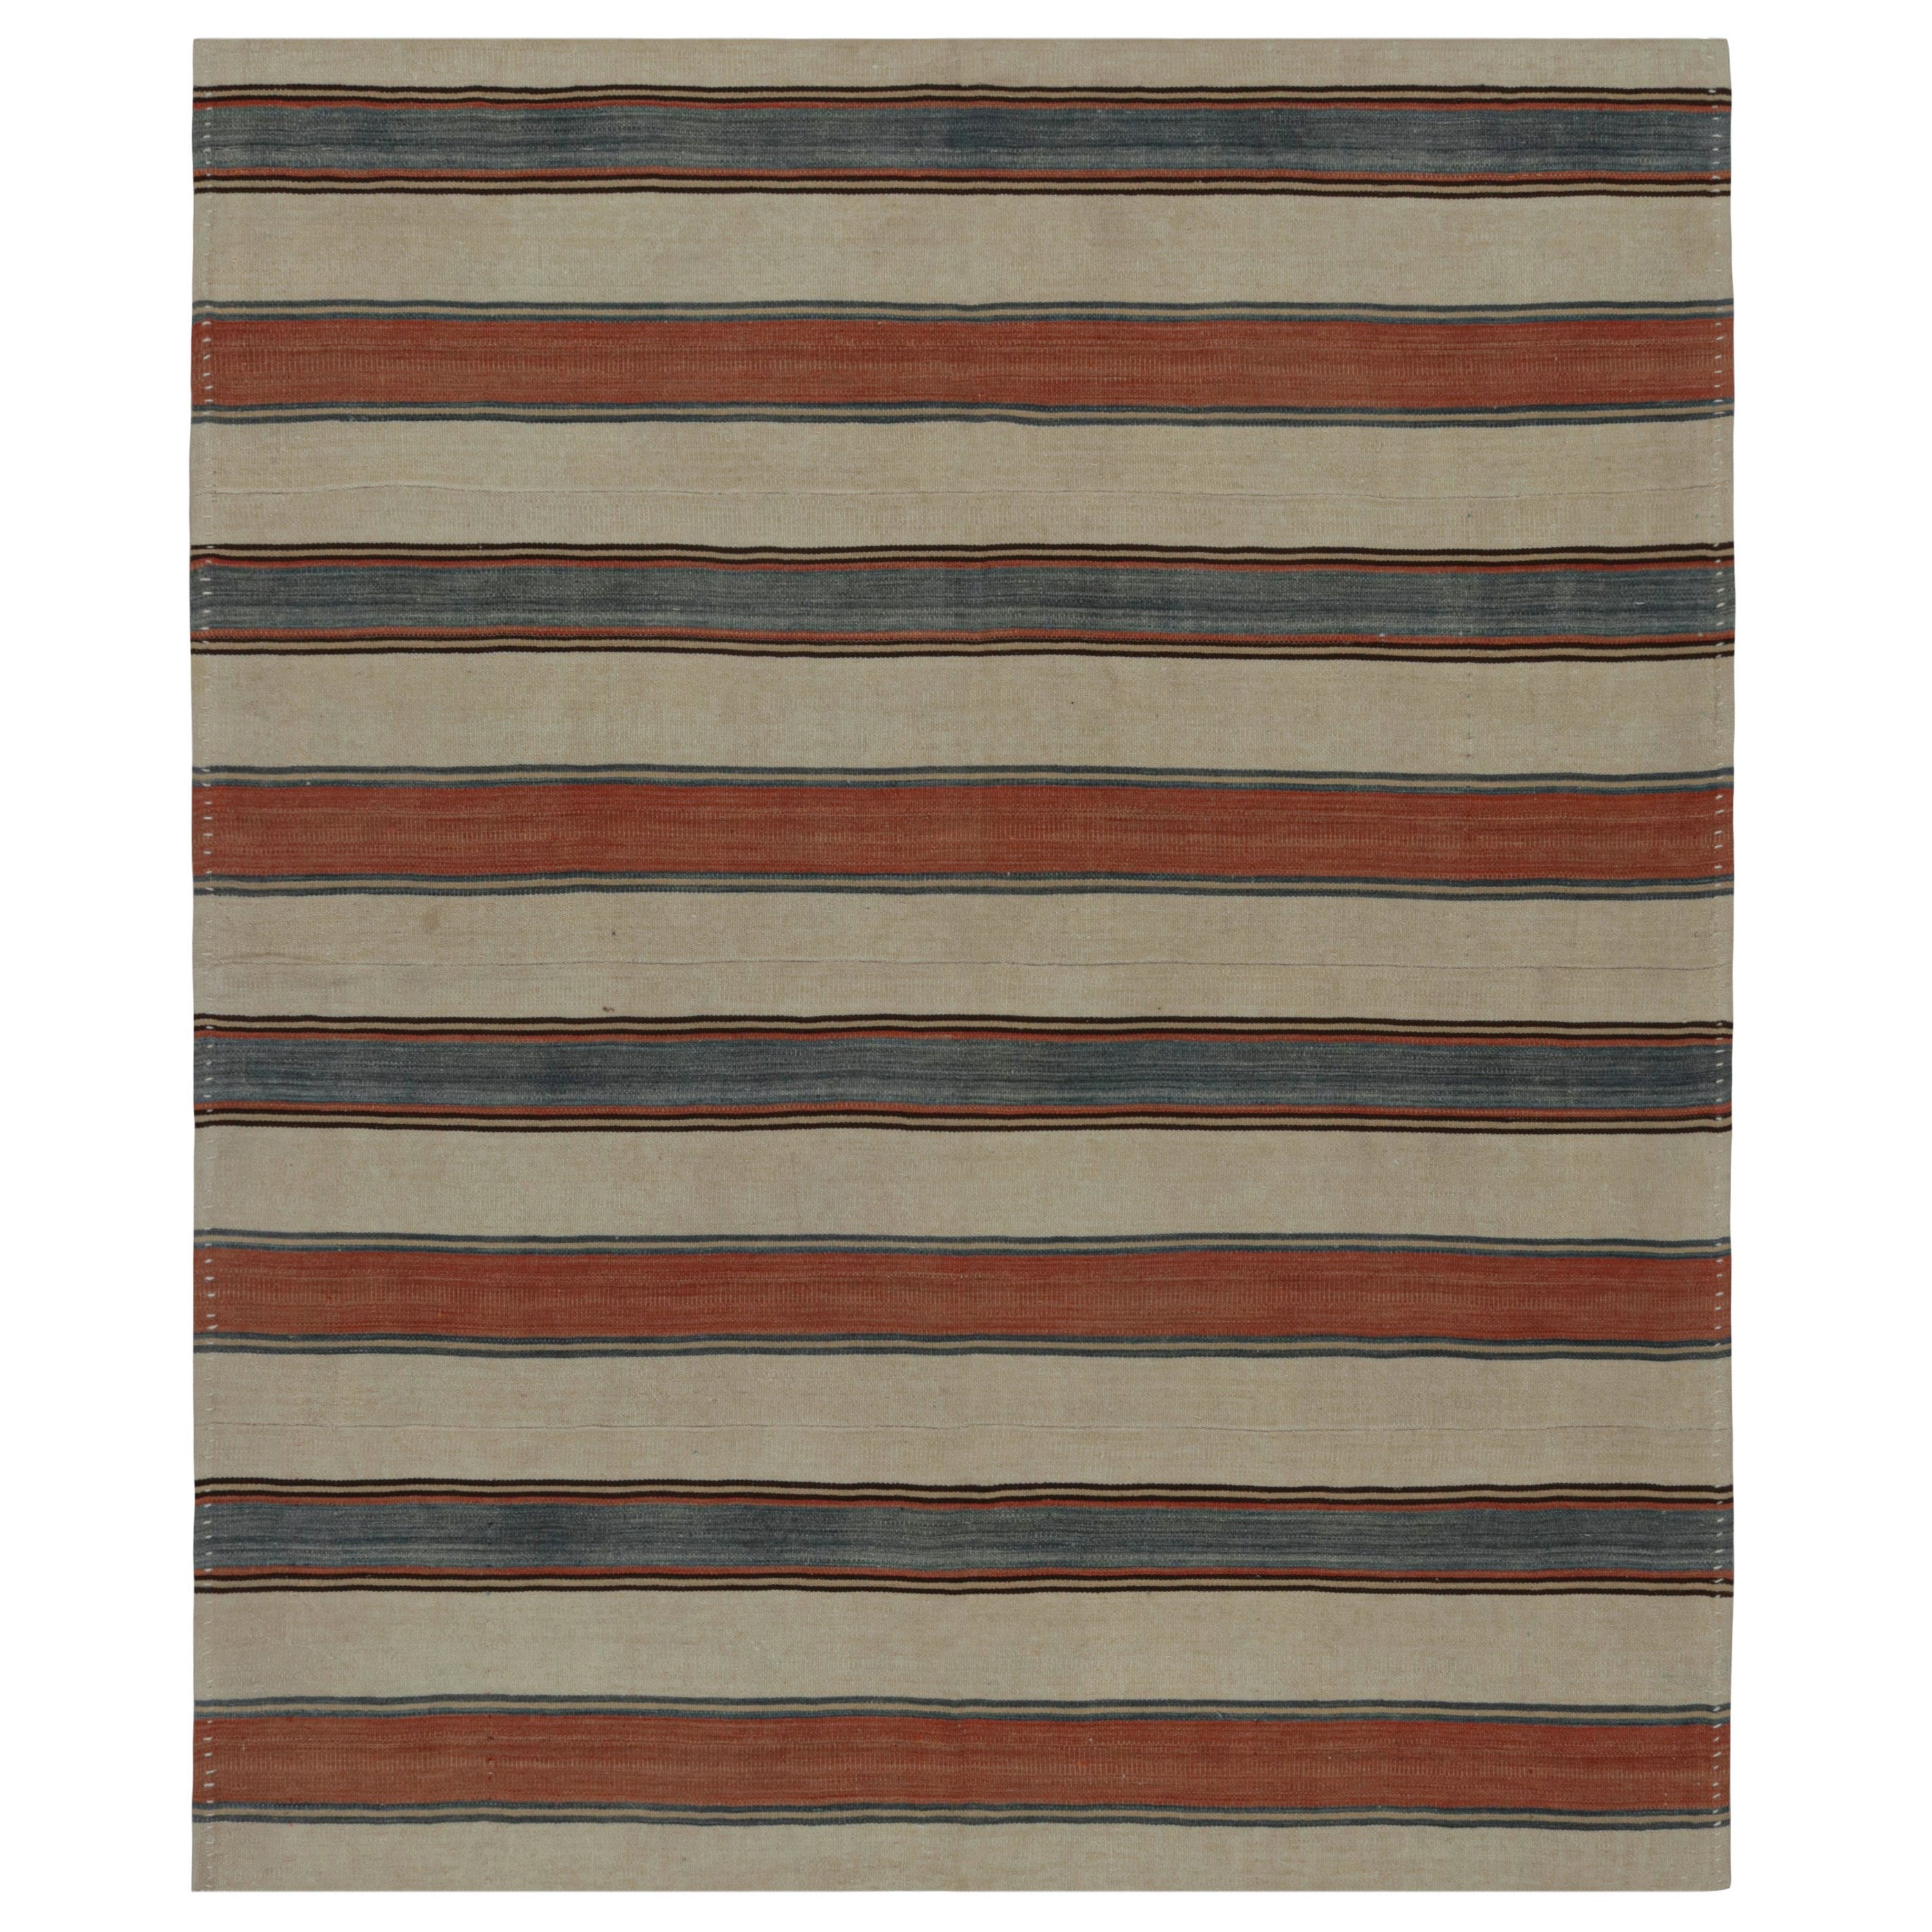 Vintage Afghani tribal Kilim rug, with Stripes, from Rug & Kilim For Sale